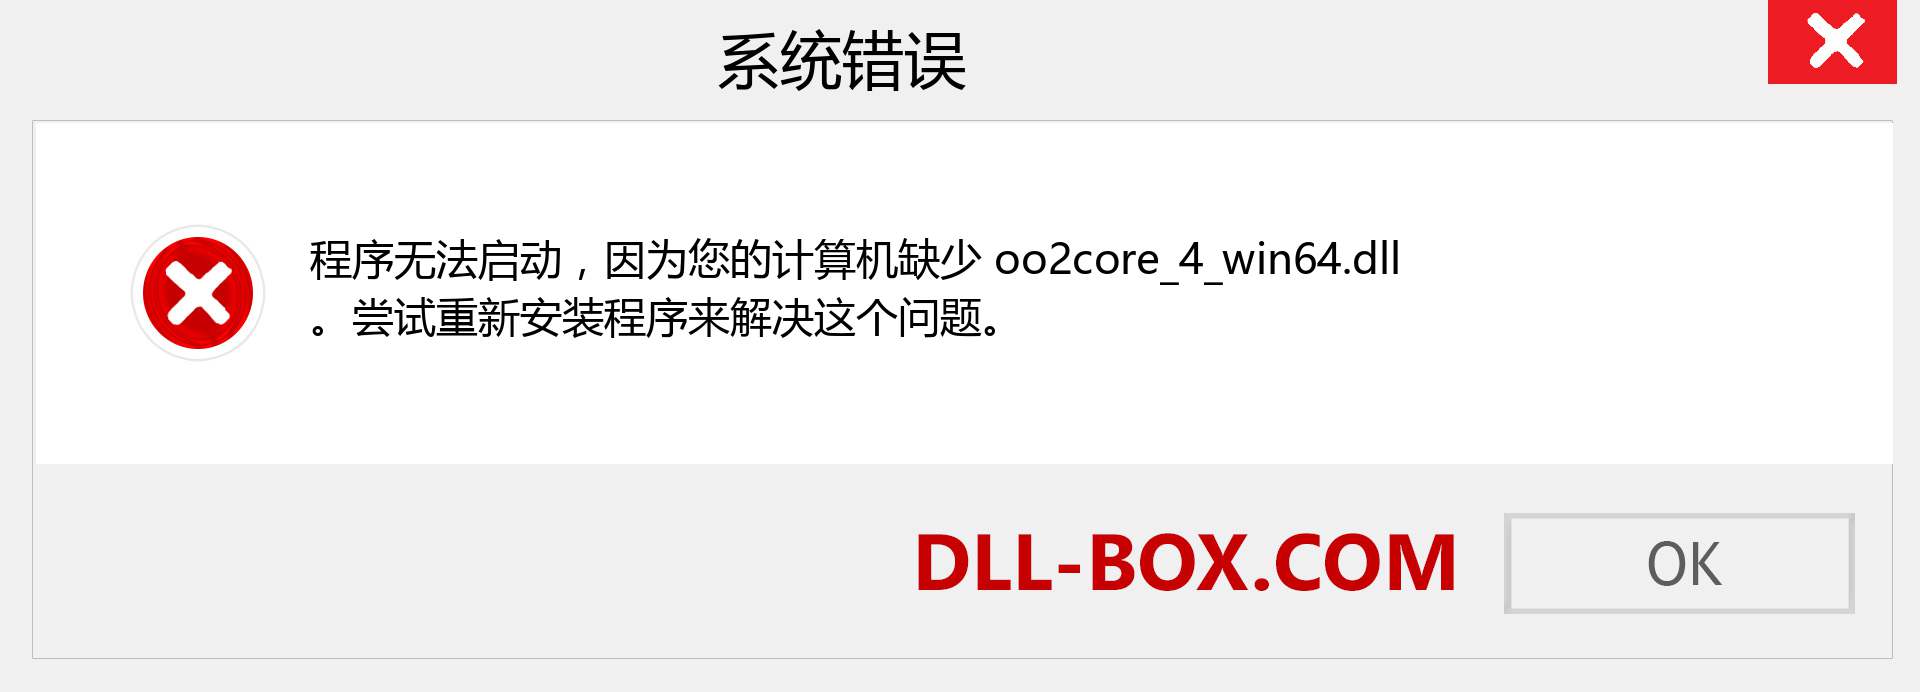 oo2core_4_win64.dll 文件丢失？。 适用于 Windows 7、8、10 的下载 - 修复 Windows、照片、图像上的 oo2core_4_win64 dll 丢失错误